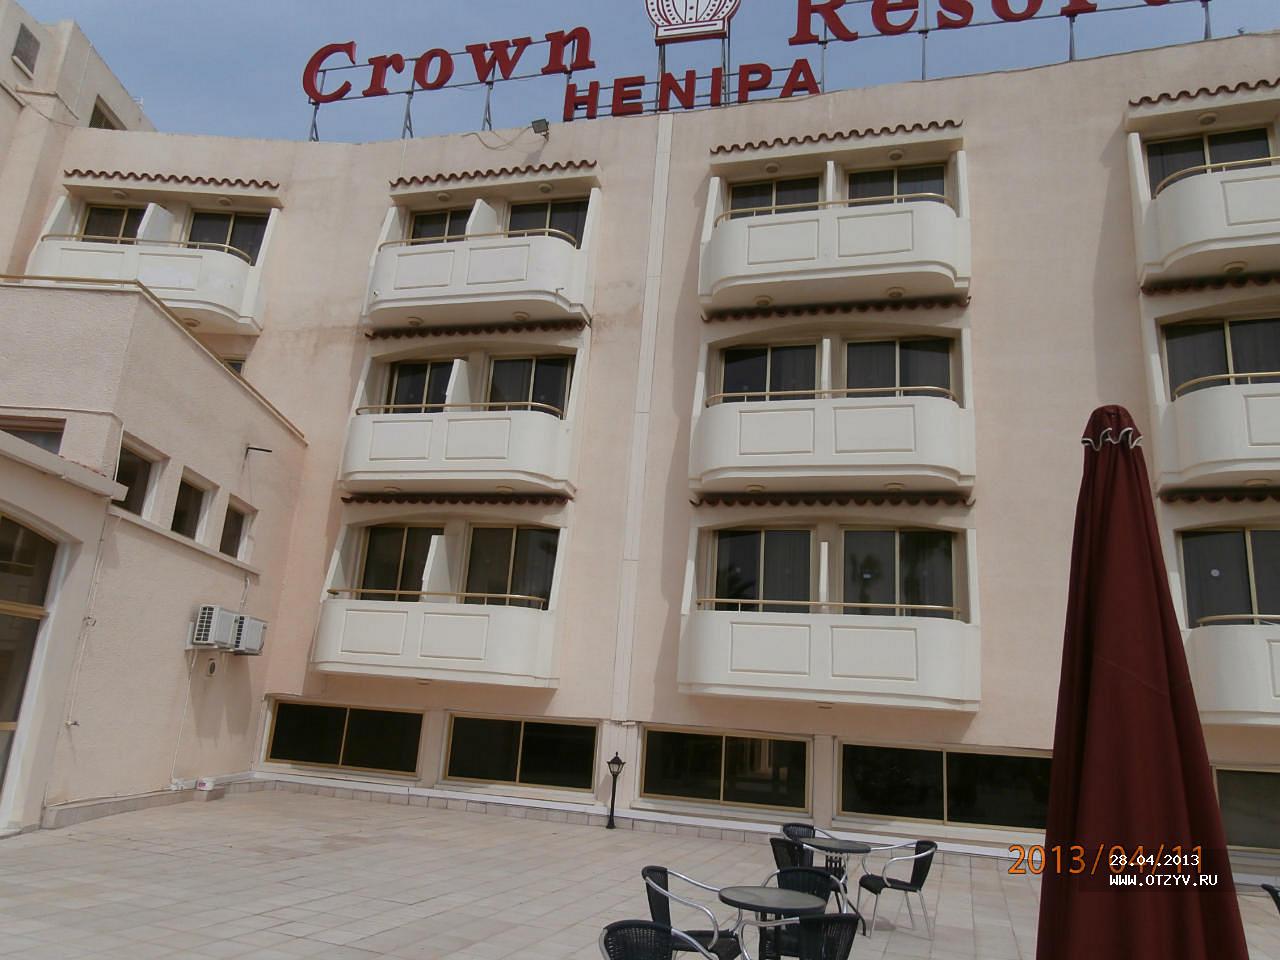 Crown Resorts Henipa